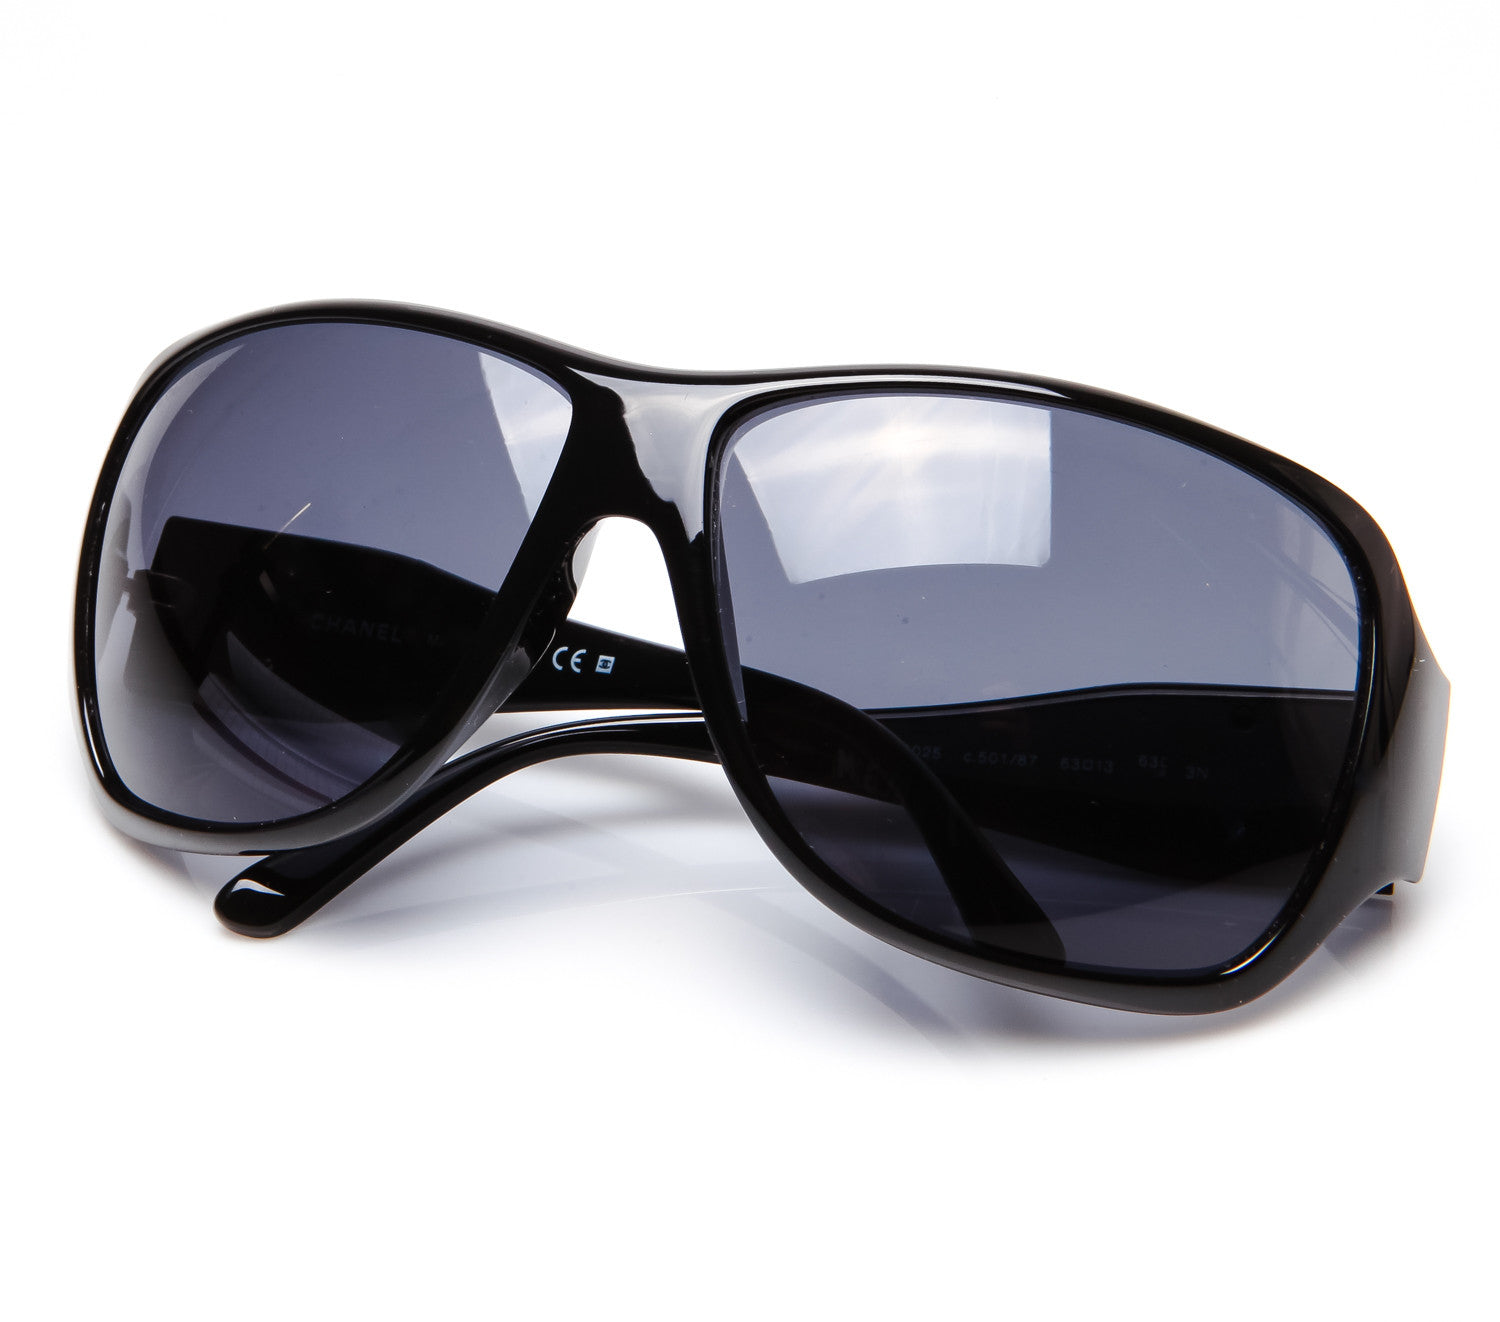 chanel 6014 sunglasses